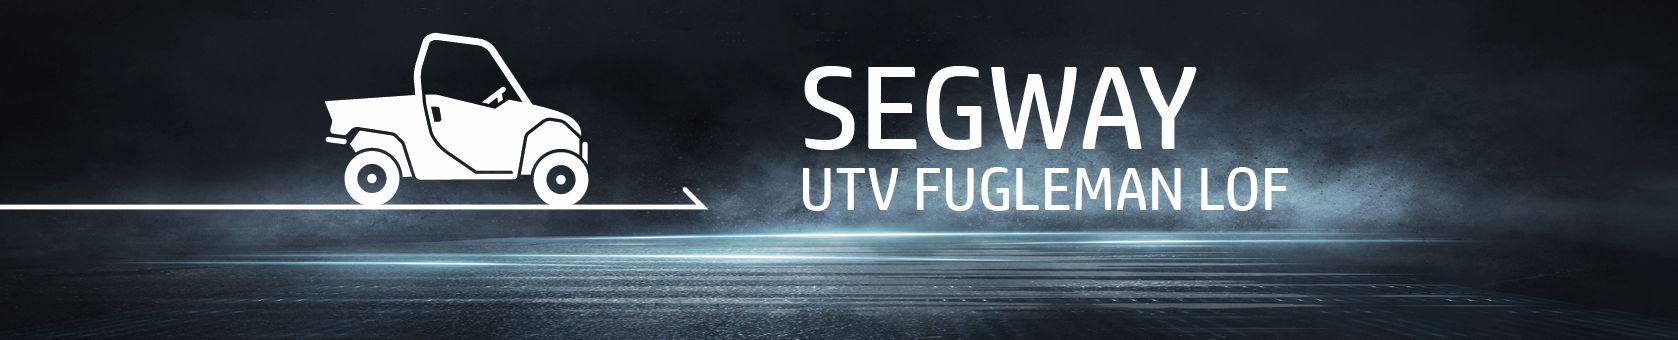 SEGWAY UTV Fugleman